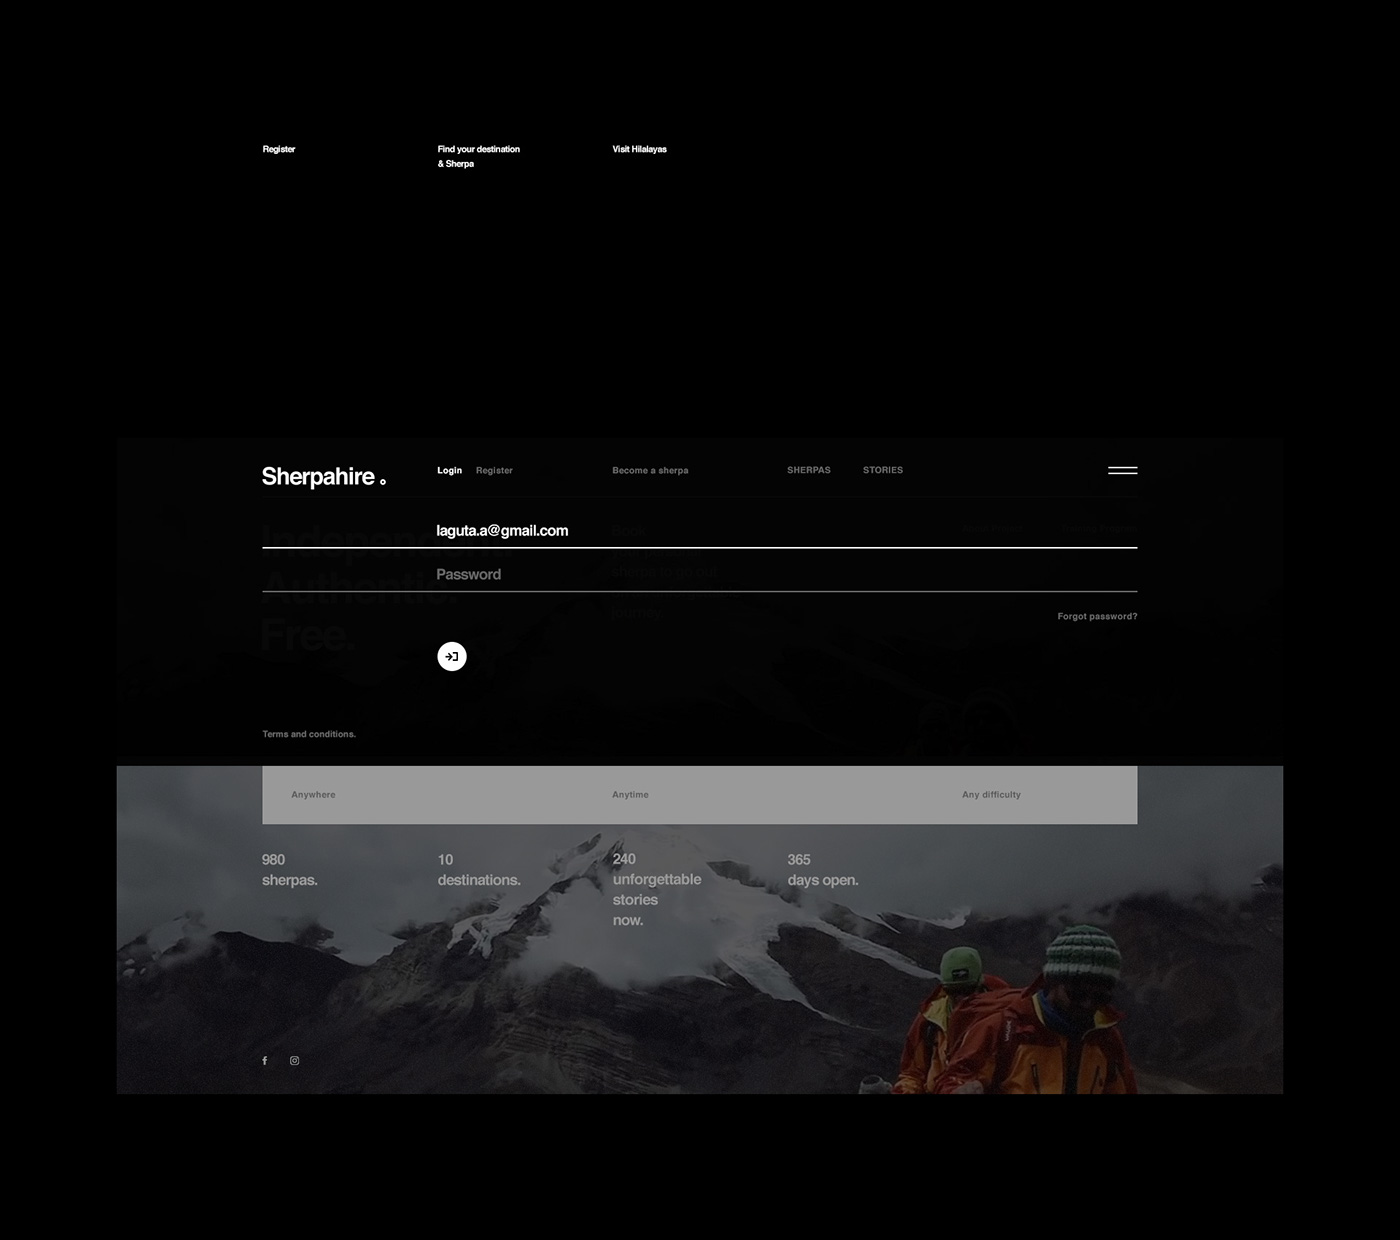 Web Website nepal sherpa himalayas promo minimal fullscreen